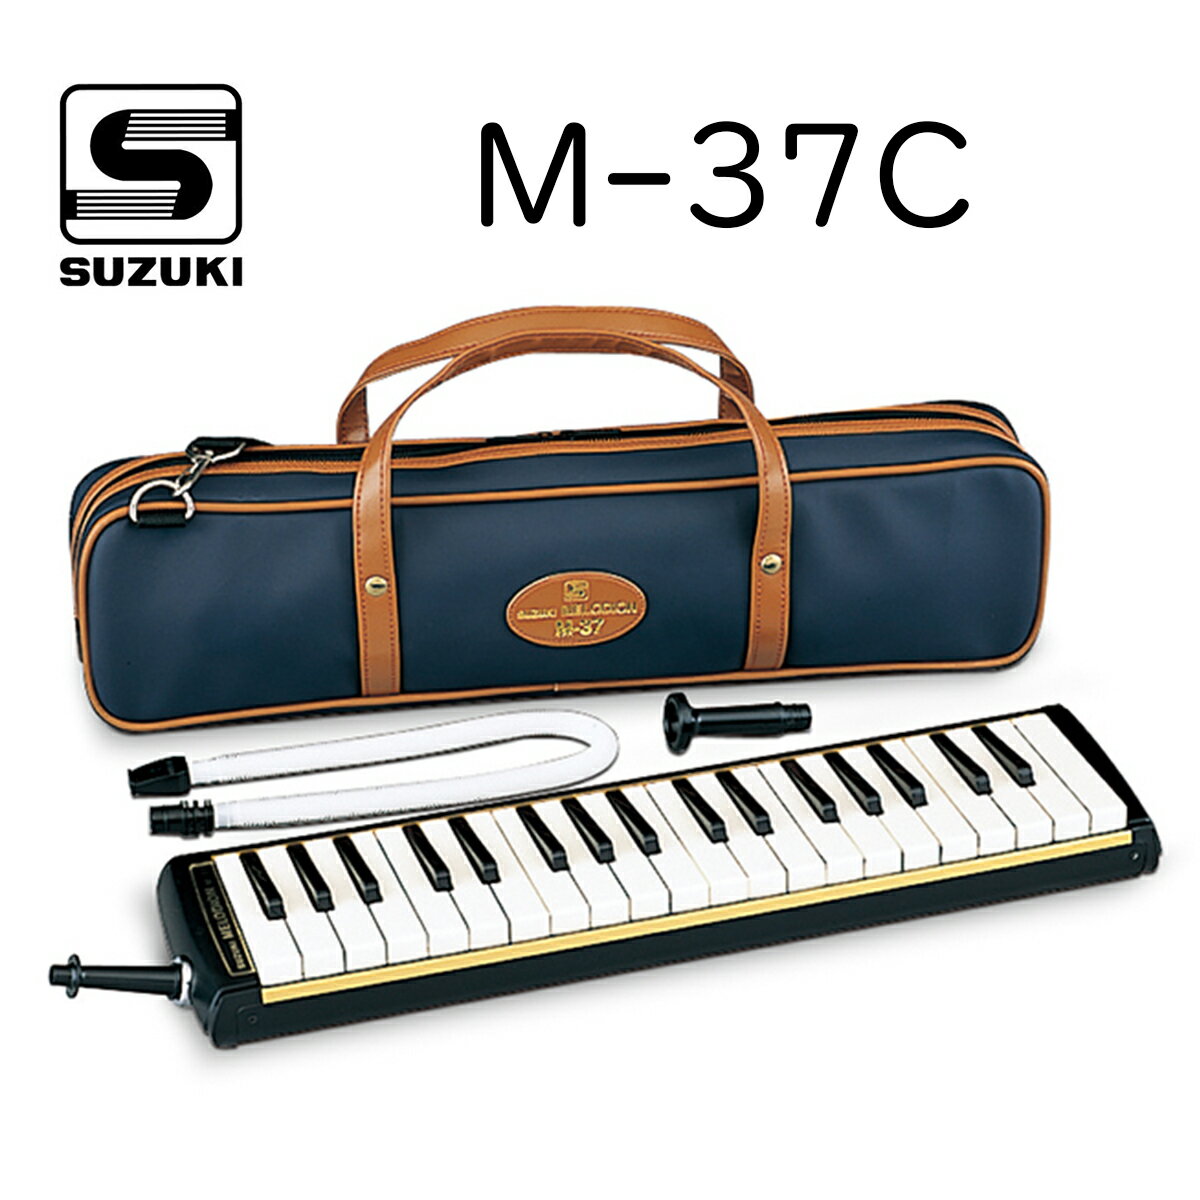 SUZUKI M-37C 新品 メロディオン アルト[スズキ,鈴木楽器][37key,37鍵盤][鍵盤ハーモニカ][Black,ブラック,黒]